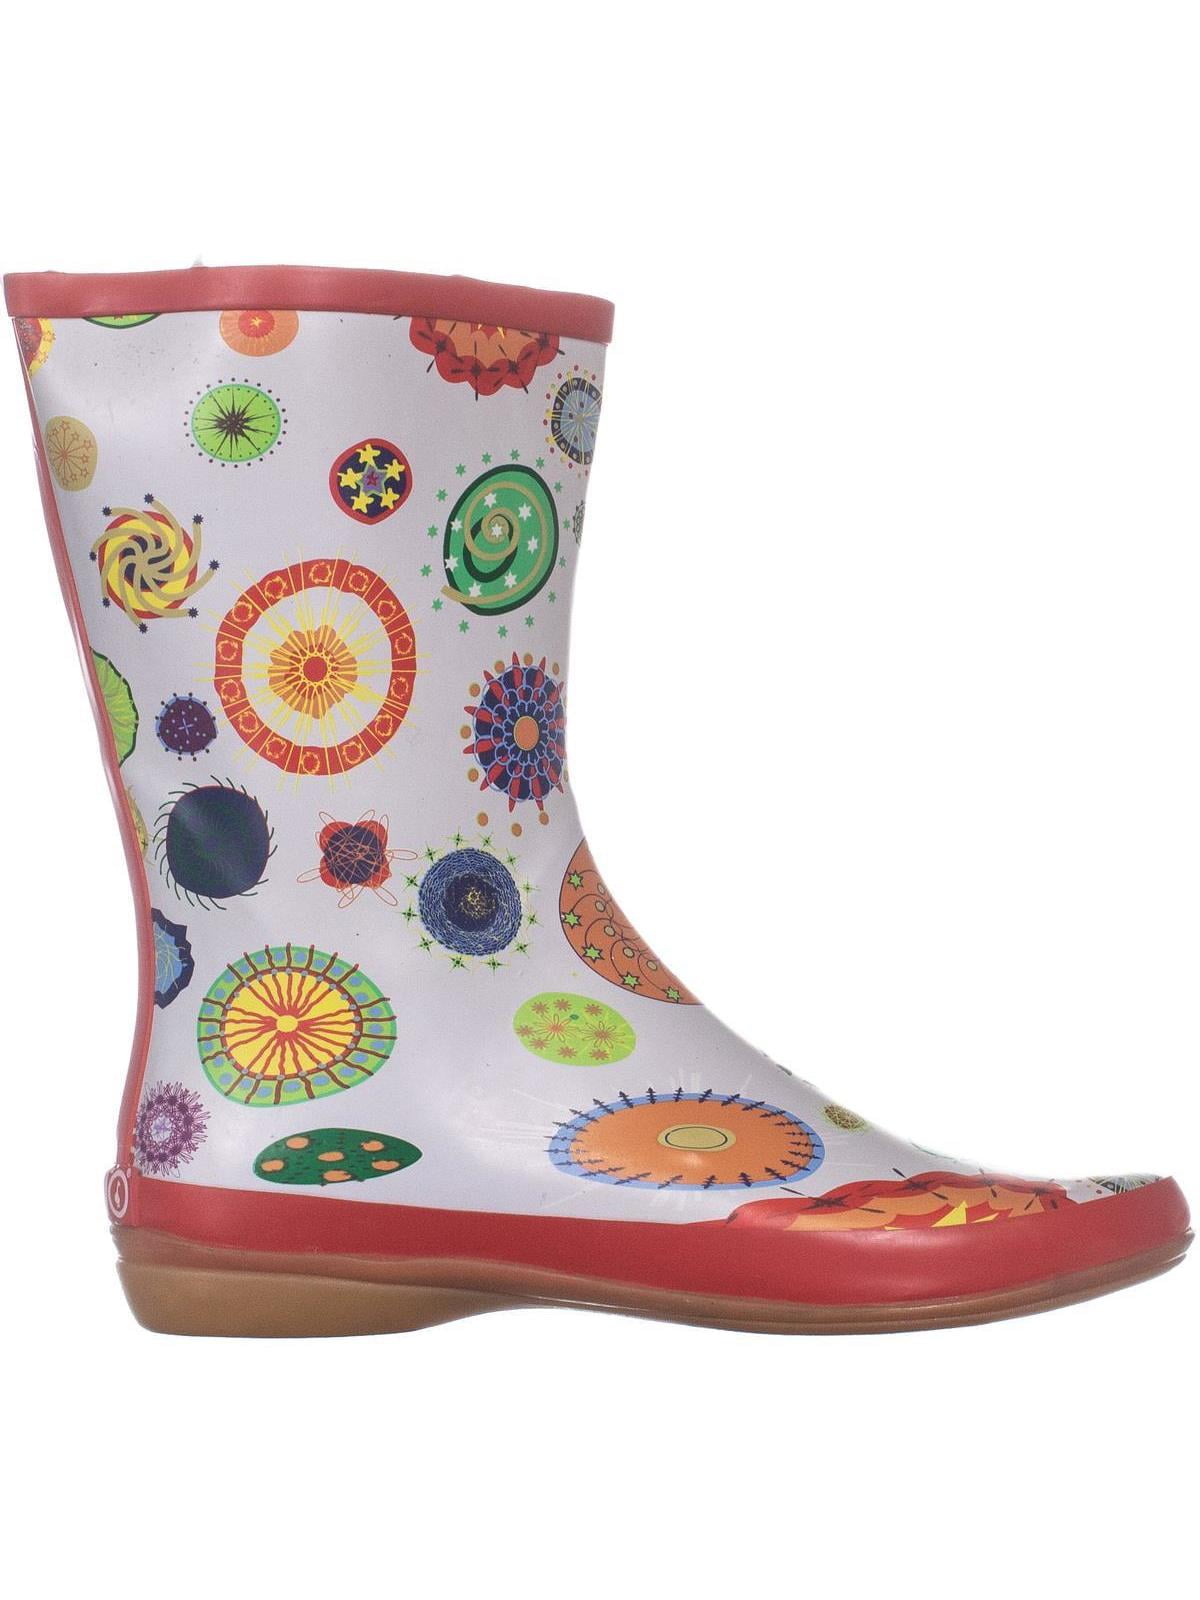 sporto women's rain boots